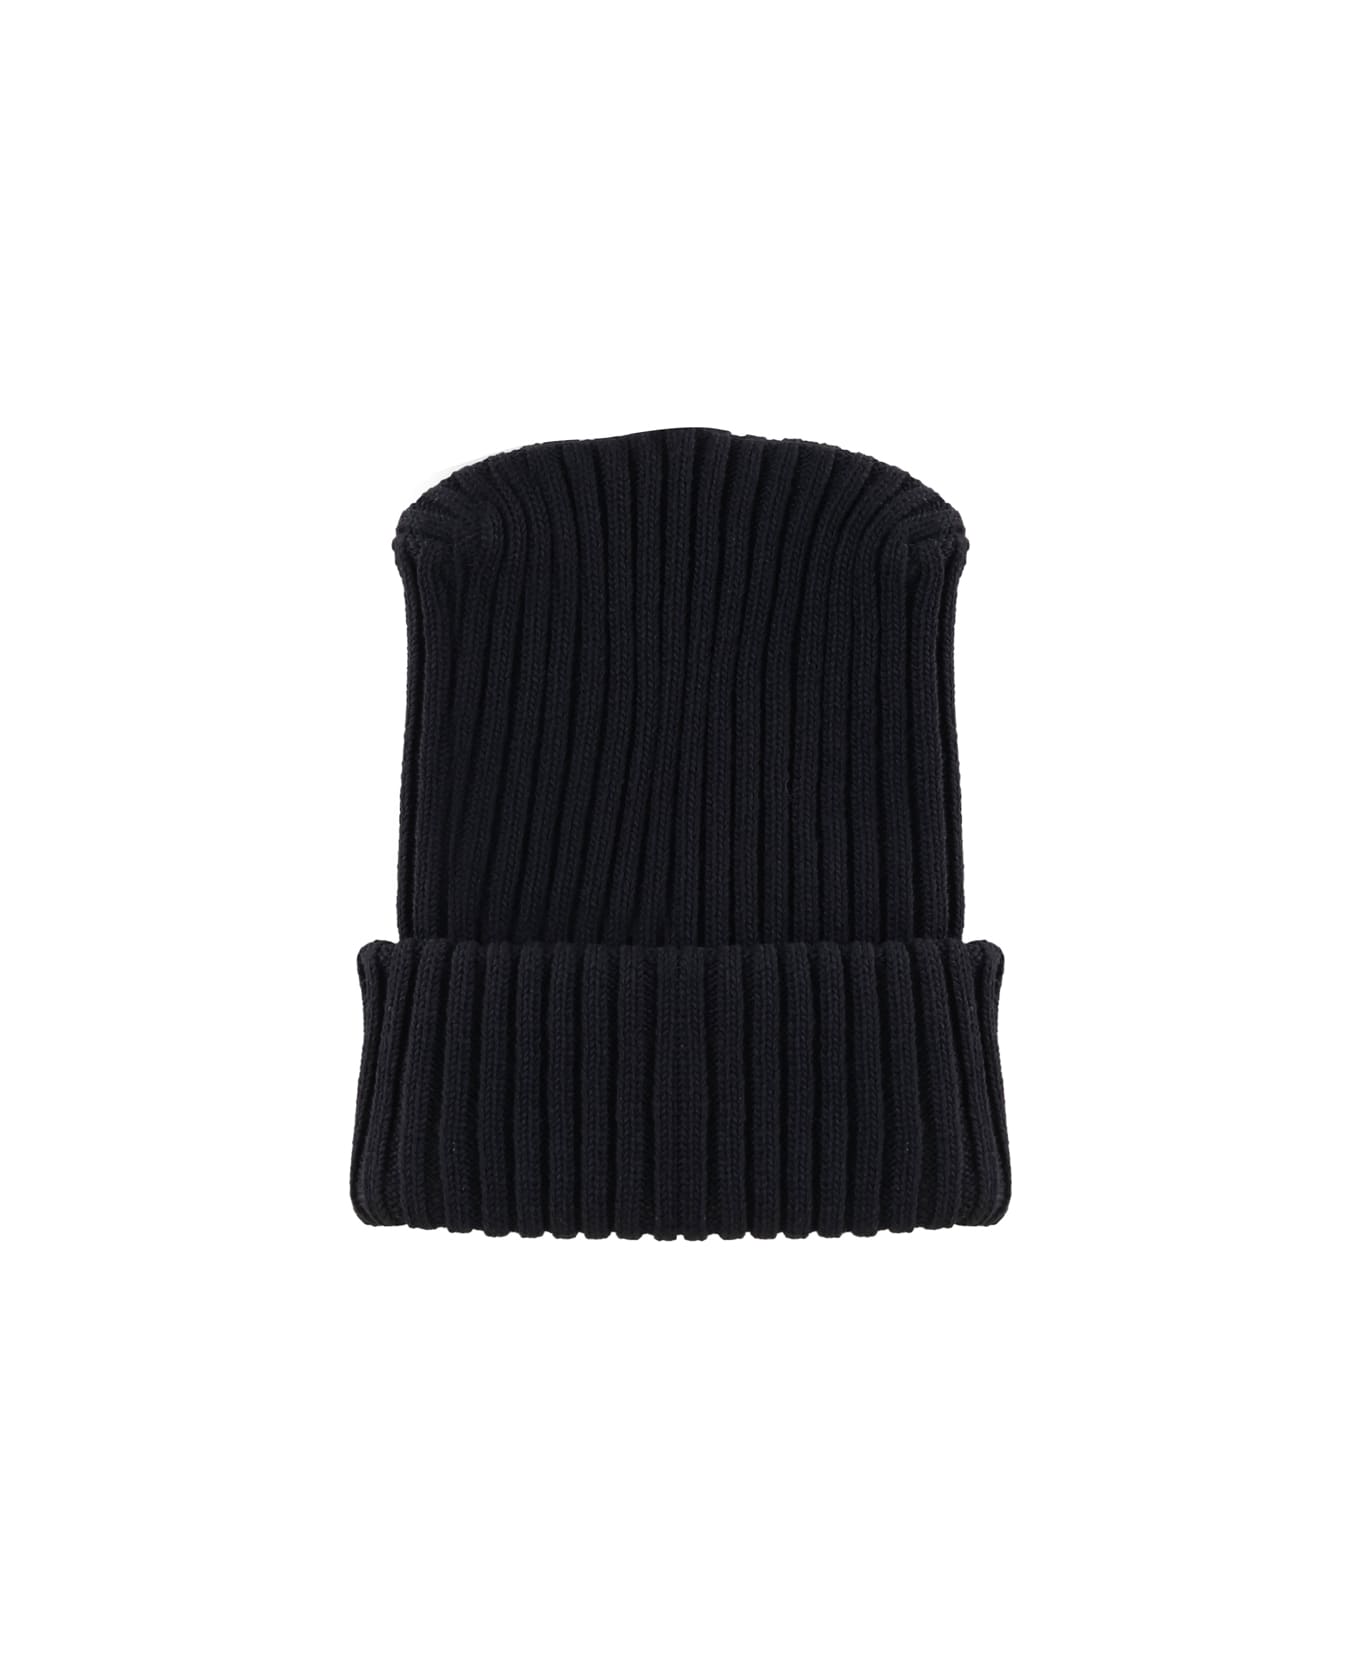 Moncler Genius Wool Cap - Black